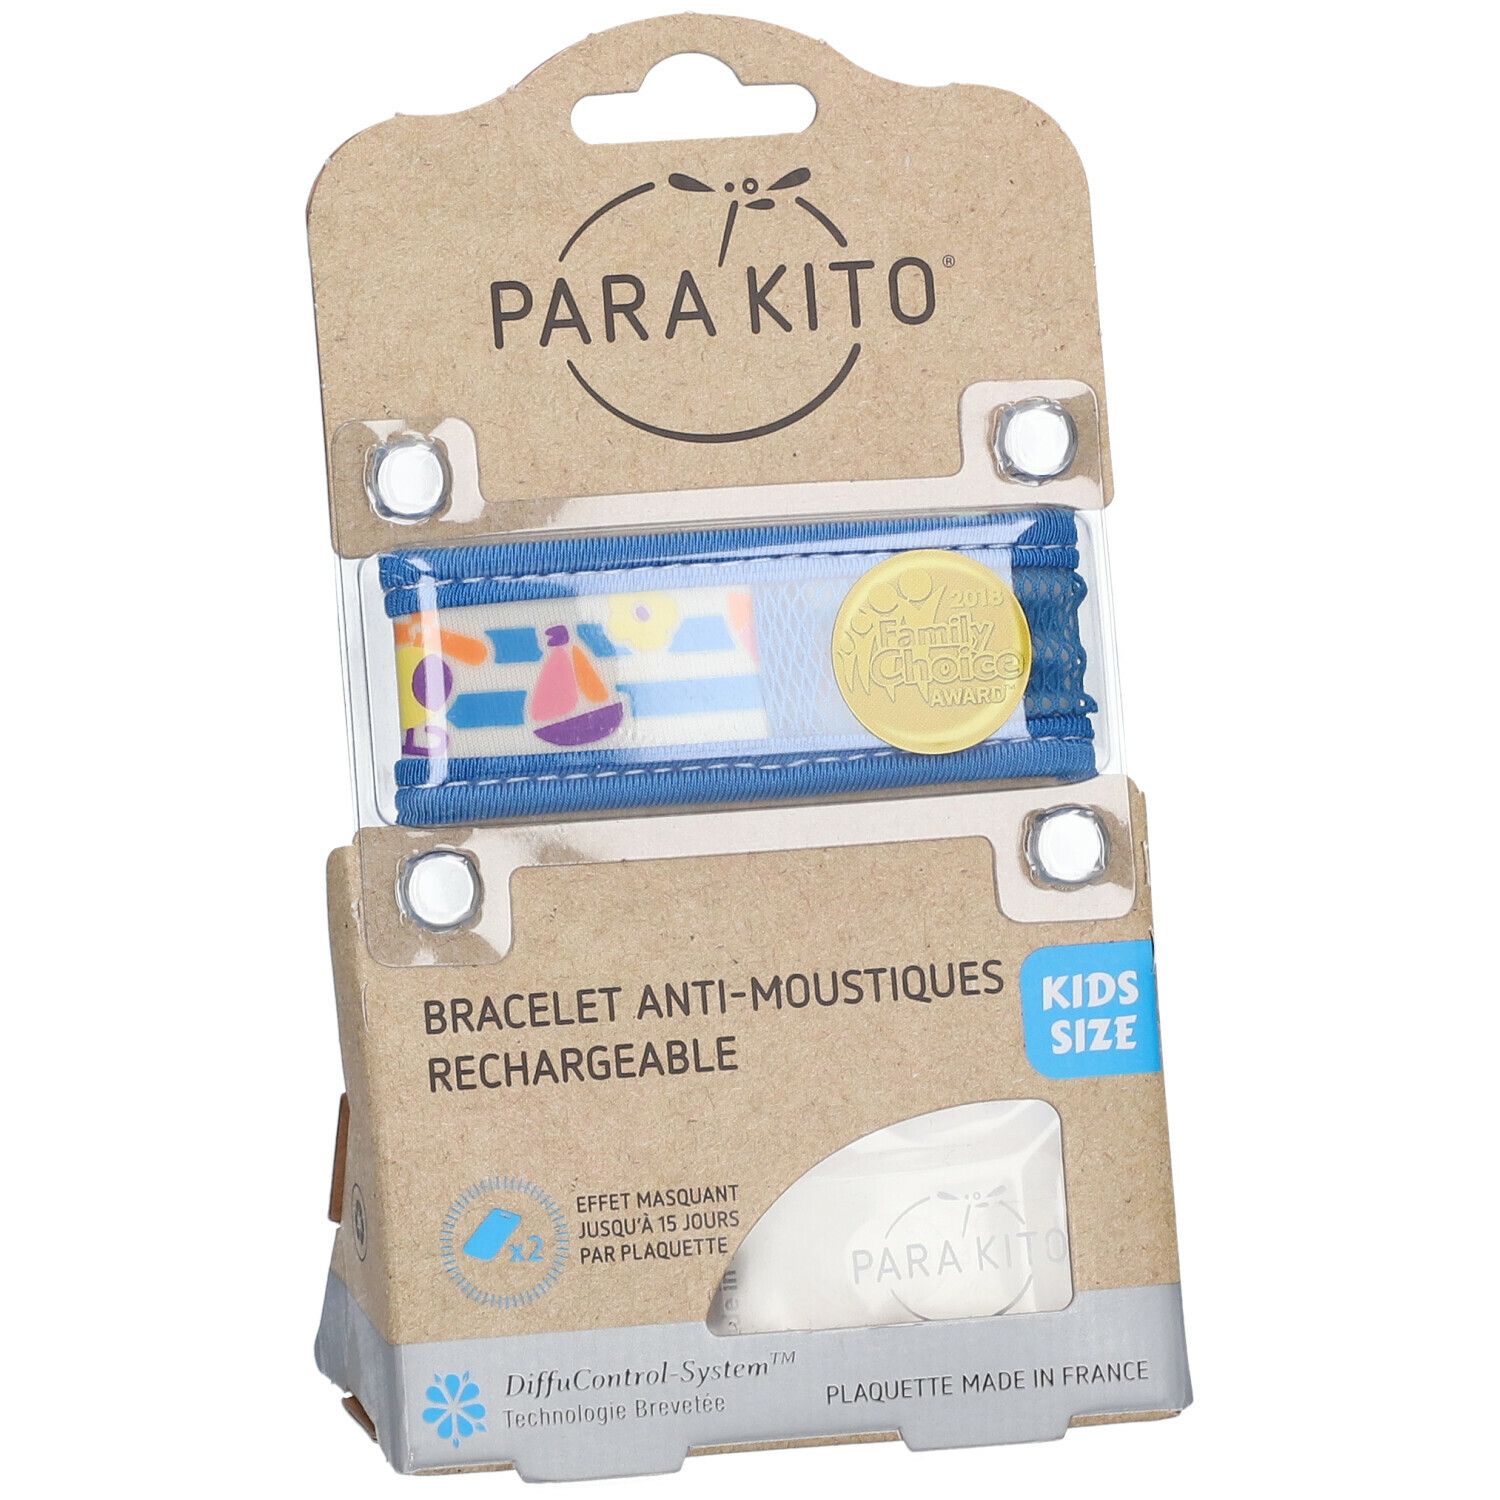 PARA KITO™ KIDS Bracelet anti-moustiques toys